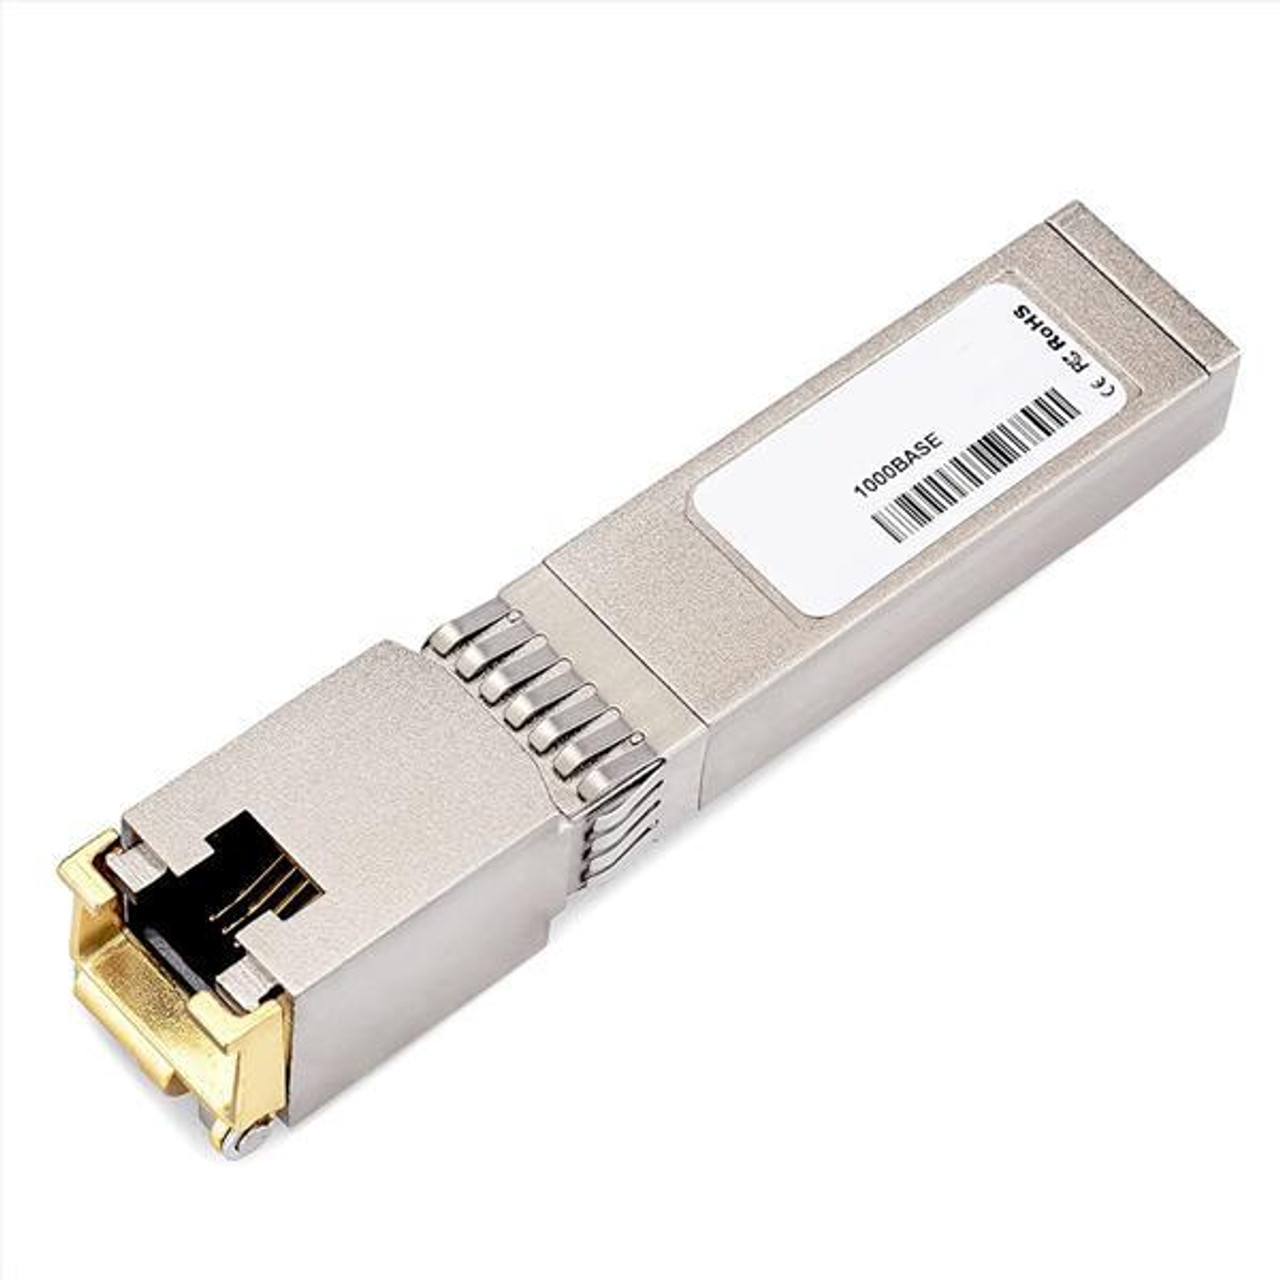 SFP-1GB-TX-ACC Accortec 1Gbps 1000Base-T Copper 100m RJ-45 Connector SFP Transceiver Module for Meraki Compatible